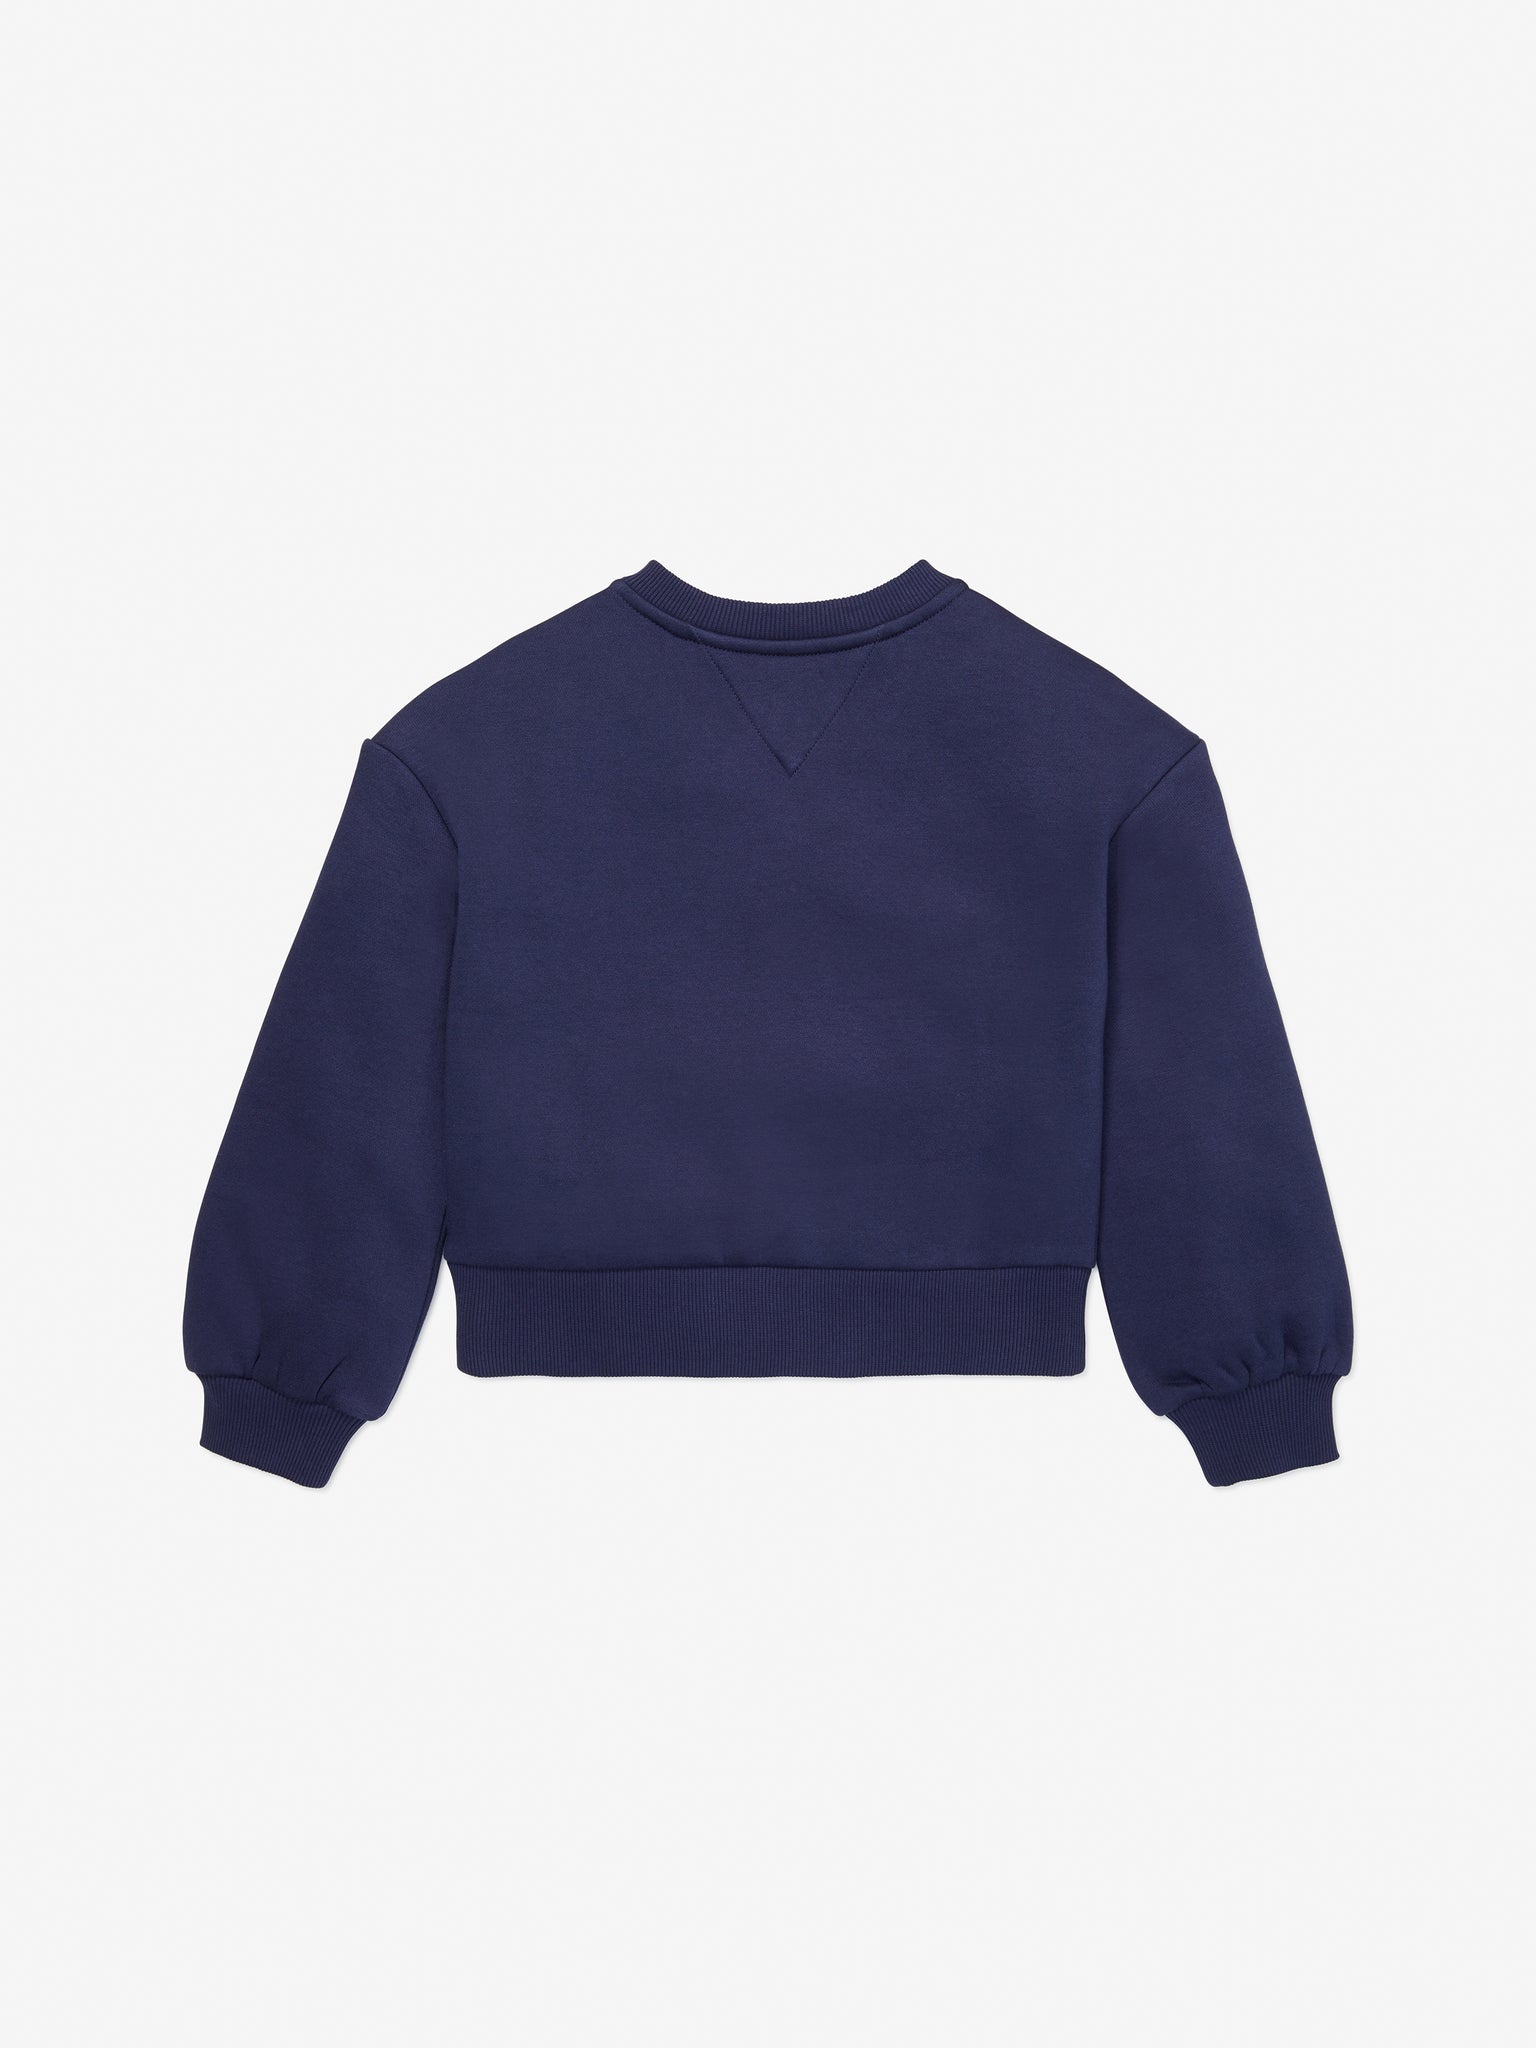 TH Letterman Sweatshirt (Girls) - Blue